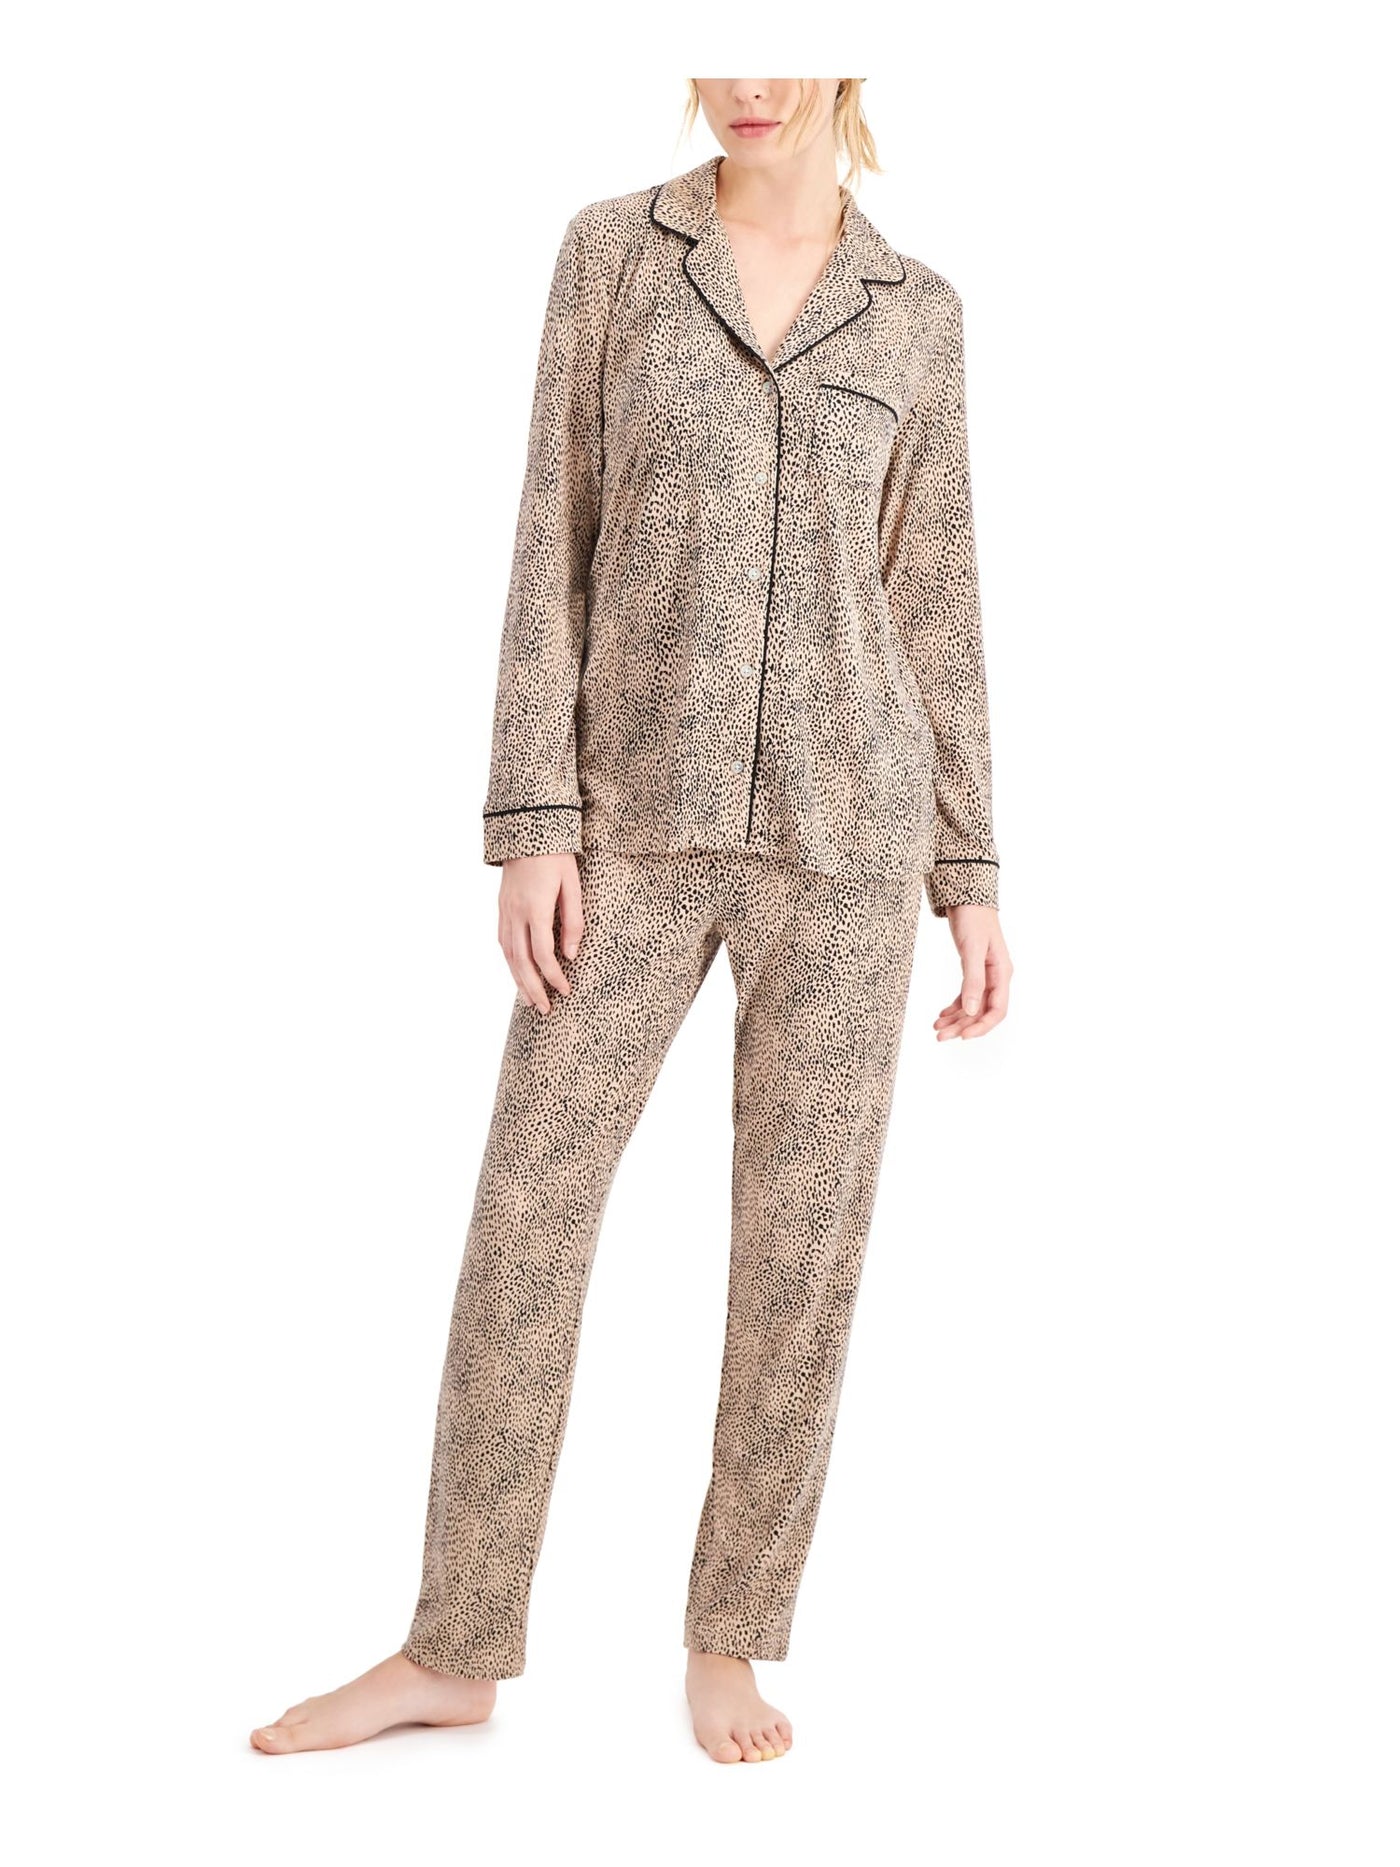 ALFANI Womens Brown Animal Print Notched Collar Long Sleeve Button Up Top Straight leg Pants Pajamas XS